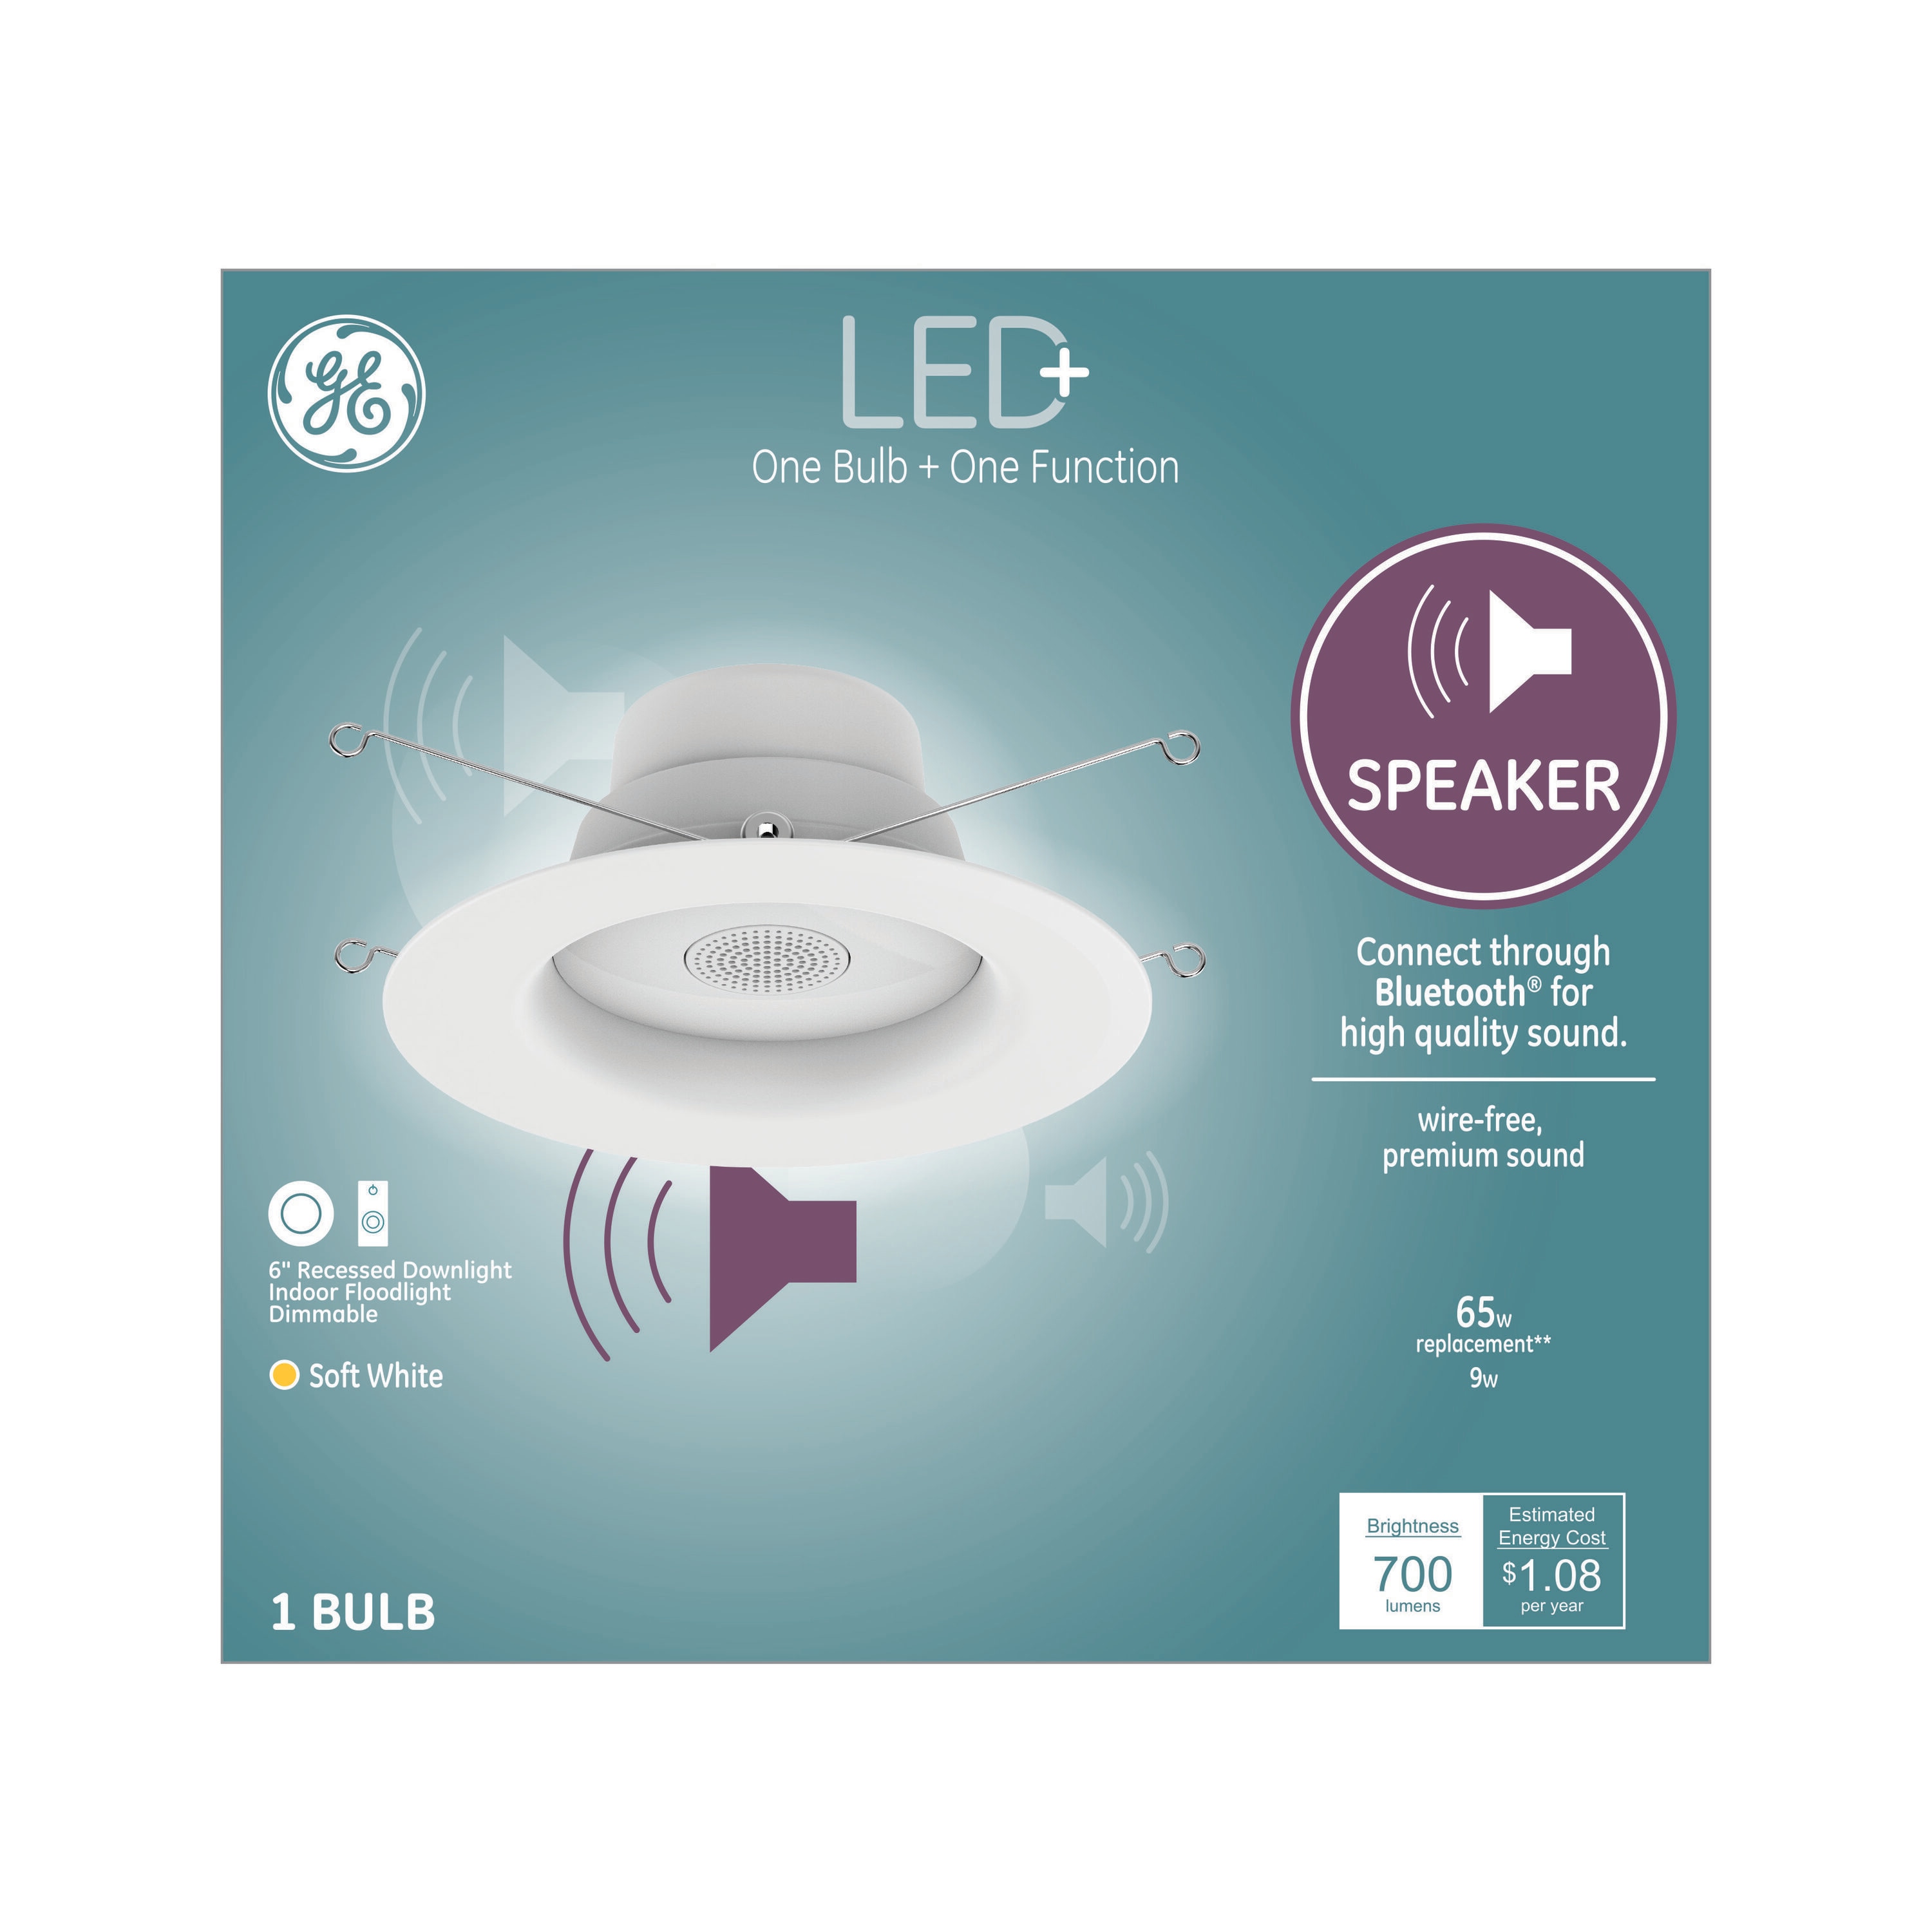 Charcoal Companion CC5166 Soundbeam Grill Light with Bluetooth Speaker